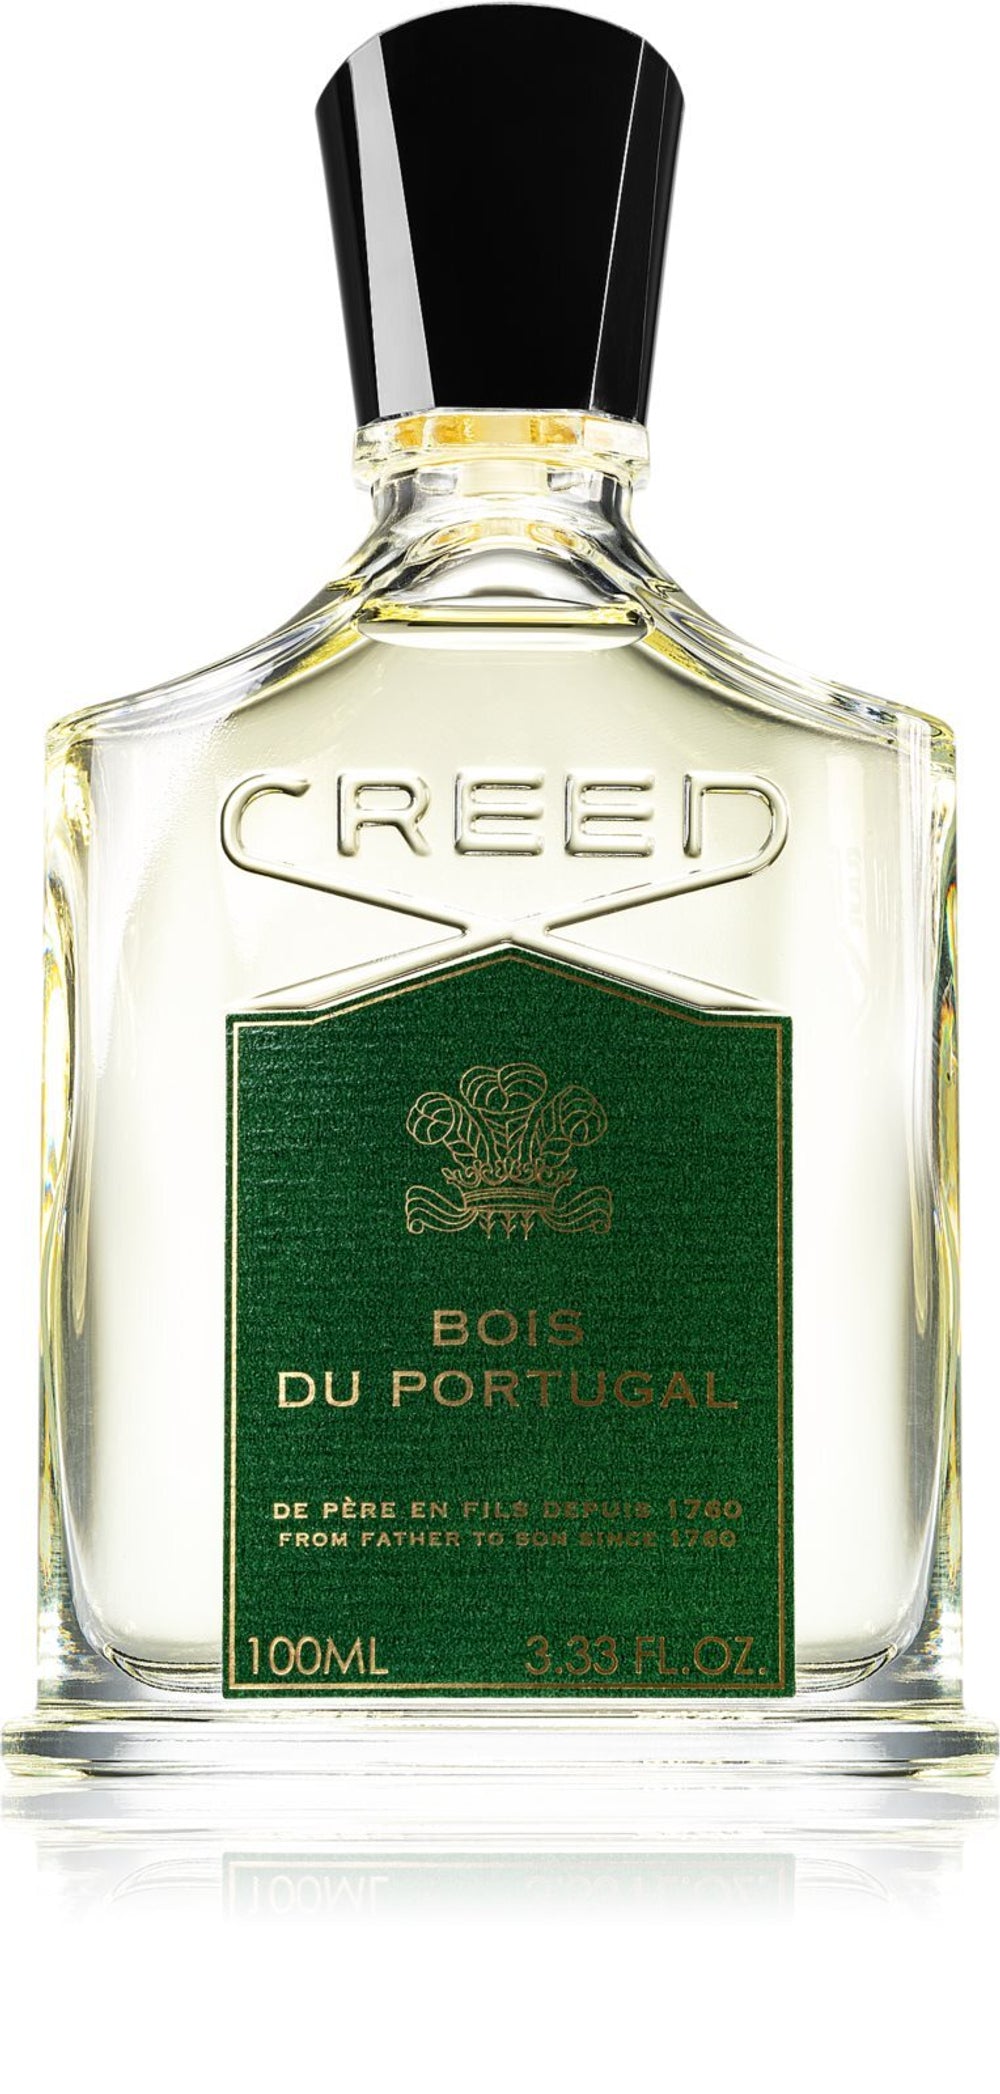 Creed Bois du Portugal 100ml Creed perfumes